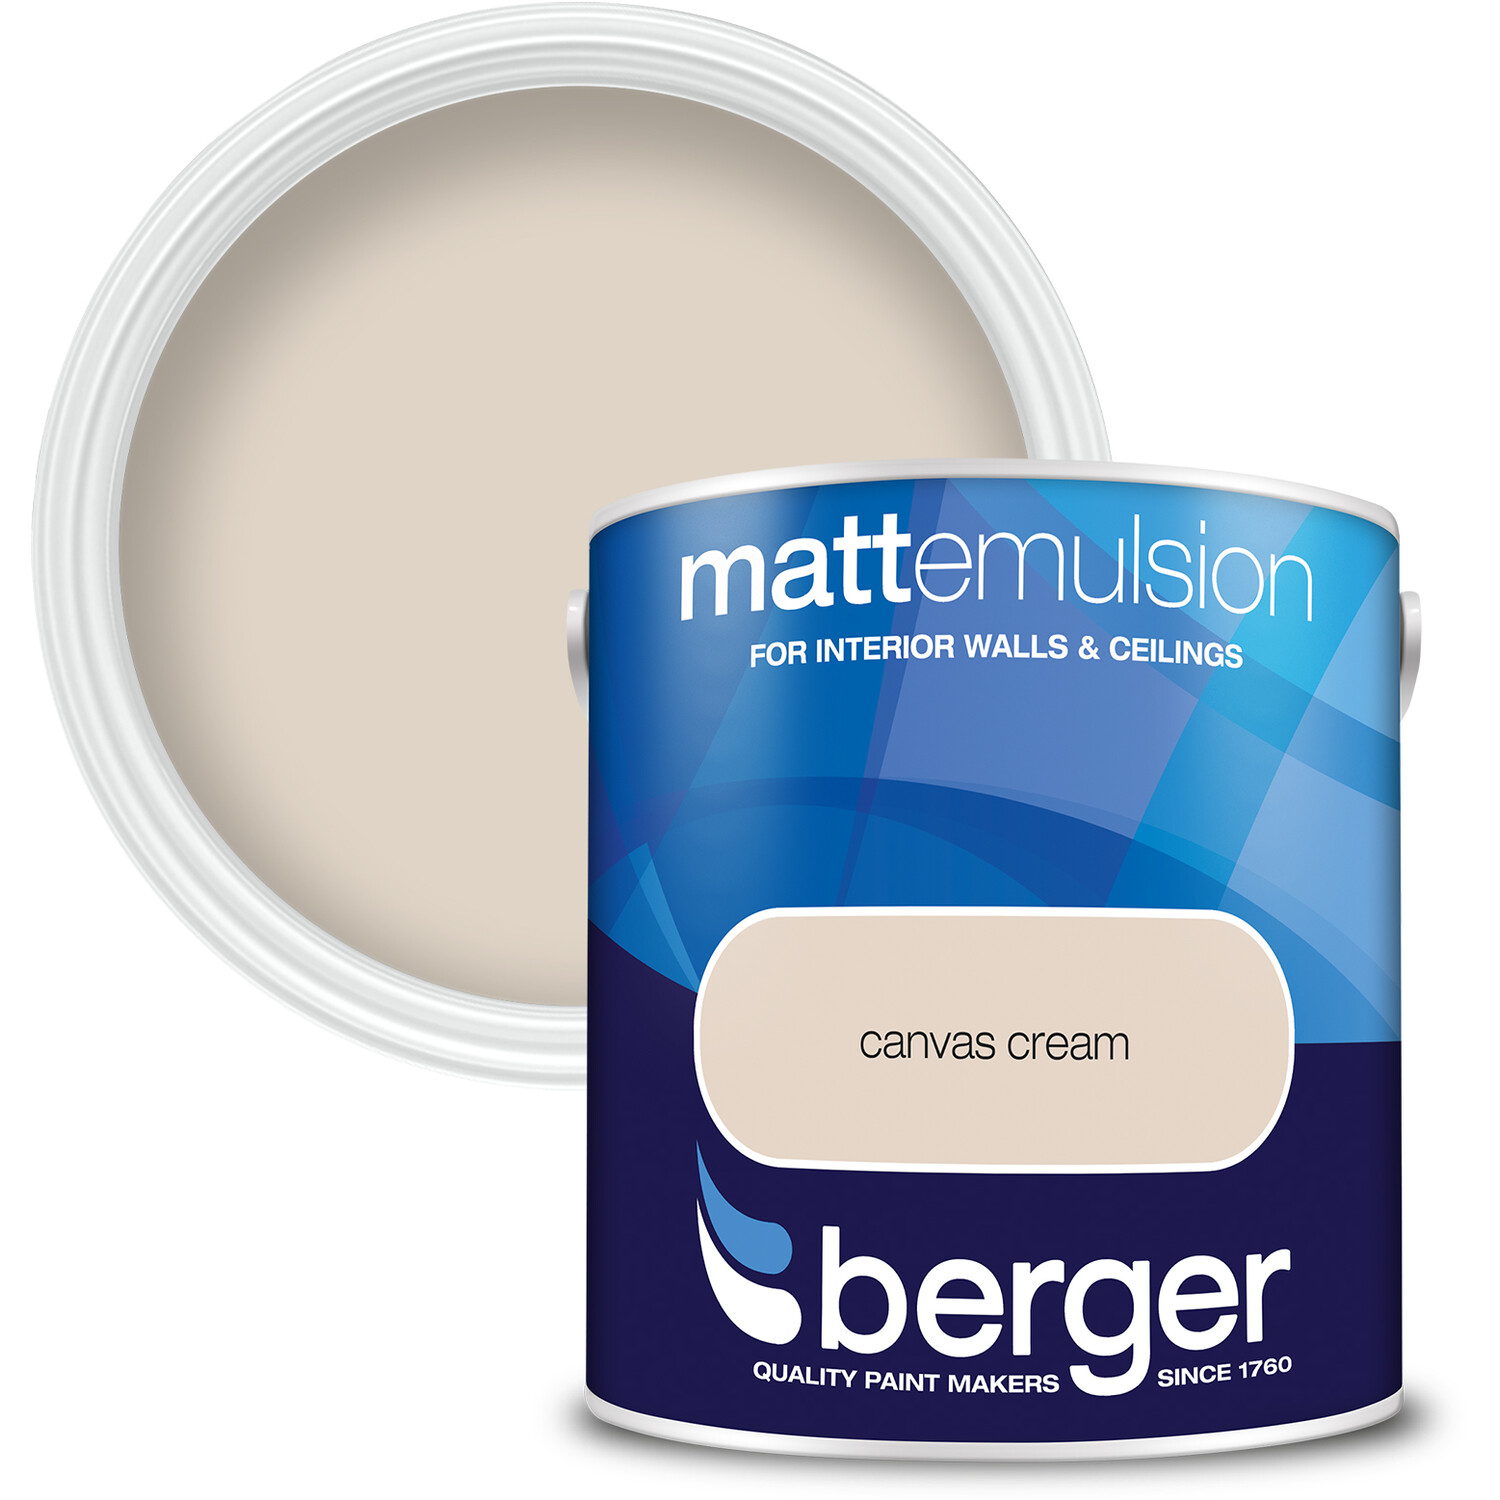 Berger Walls & Ceilings Canvas Cream Matt Emulsion Paint 2.5L Image 1